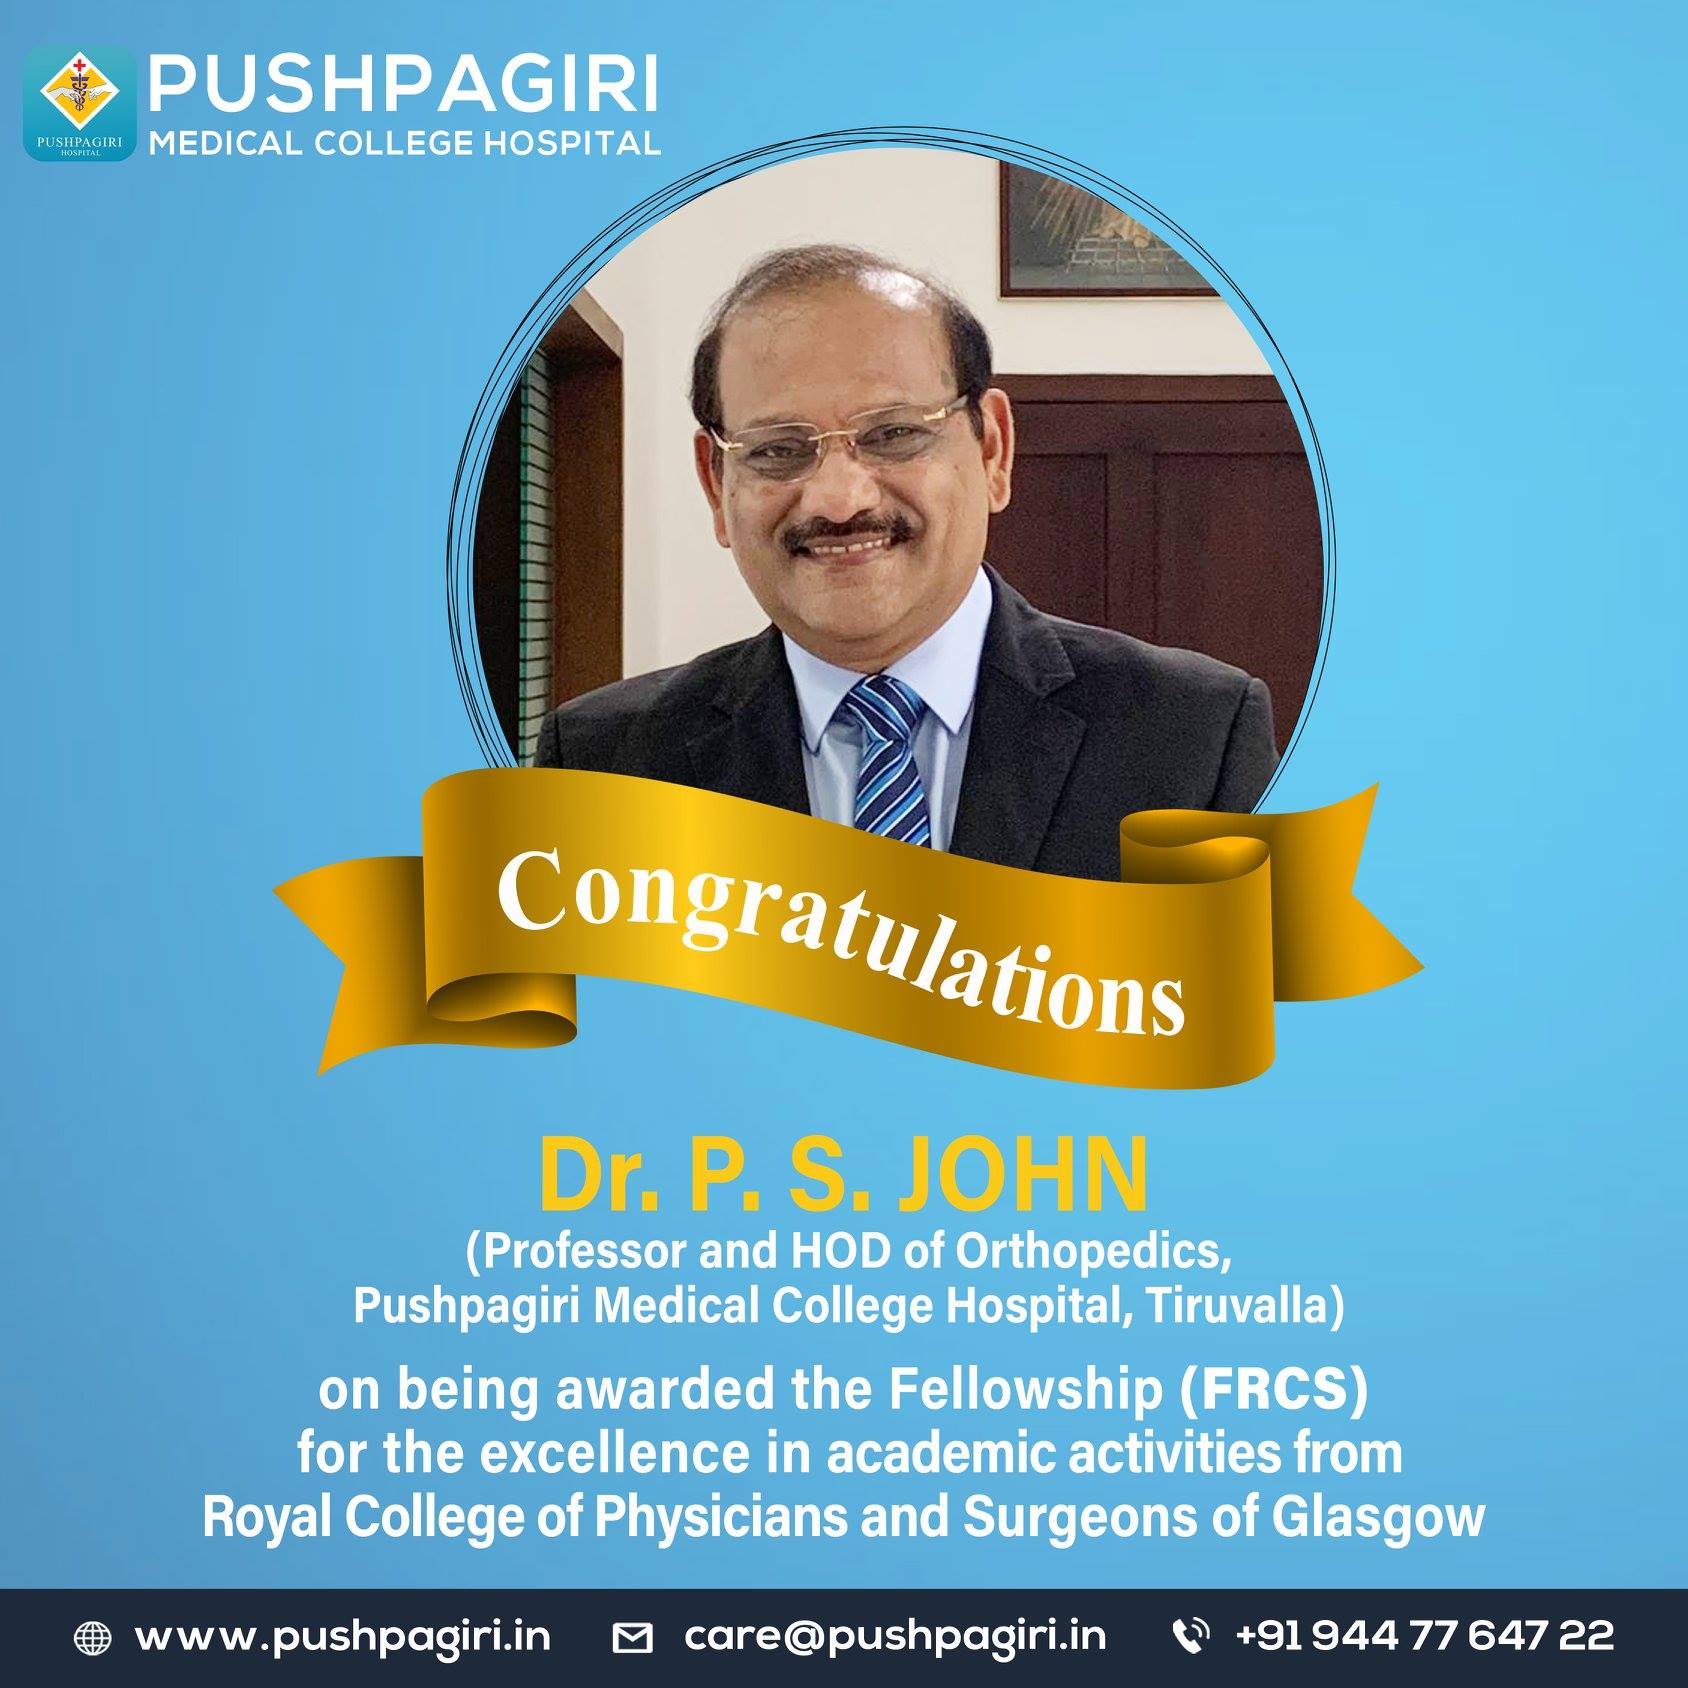 Congratulations from Pushpagiri Family